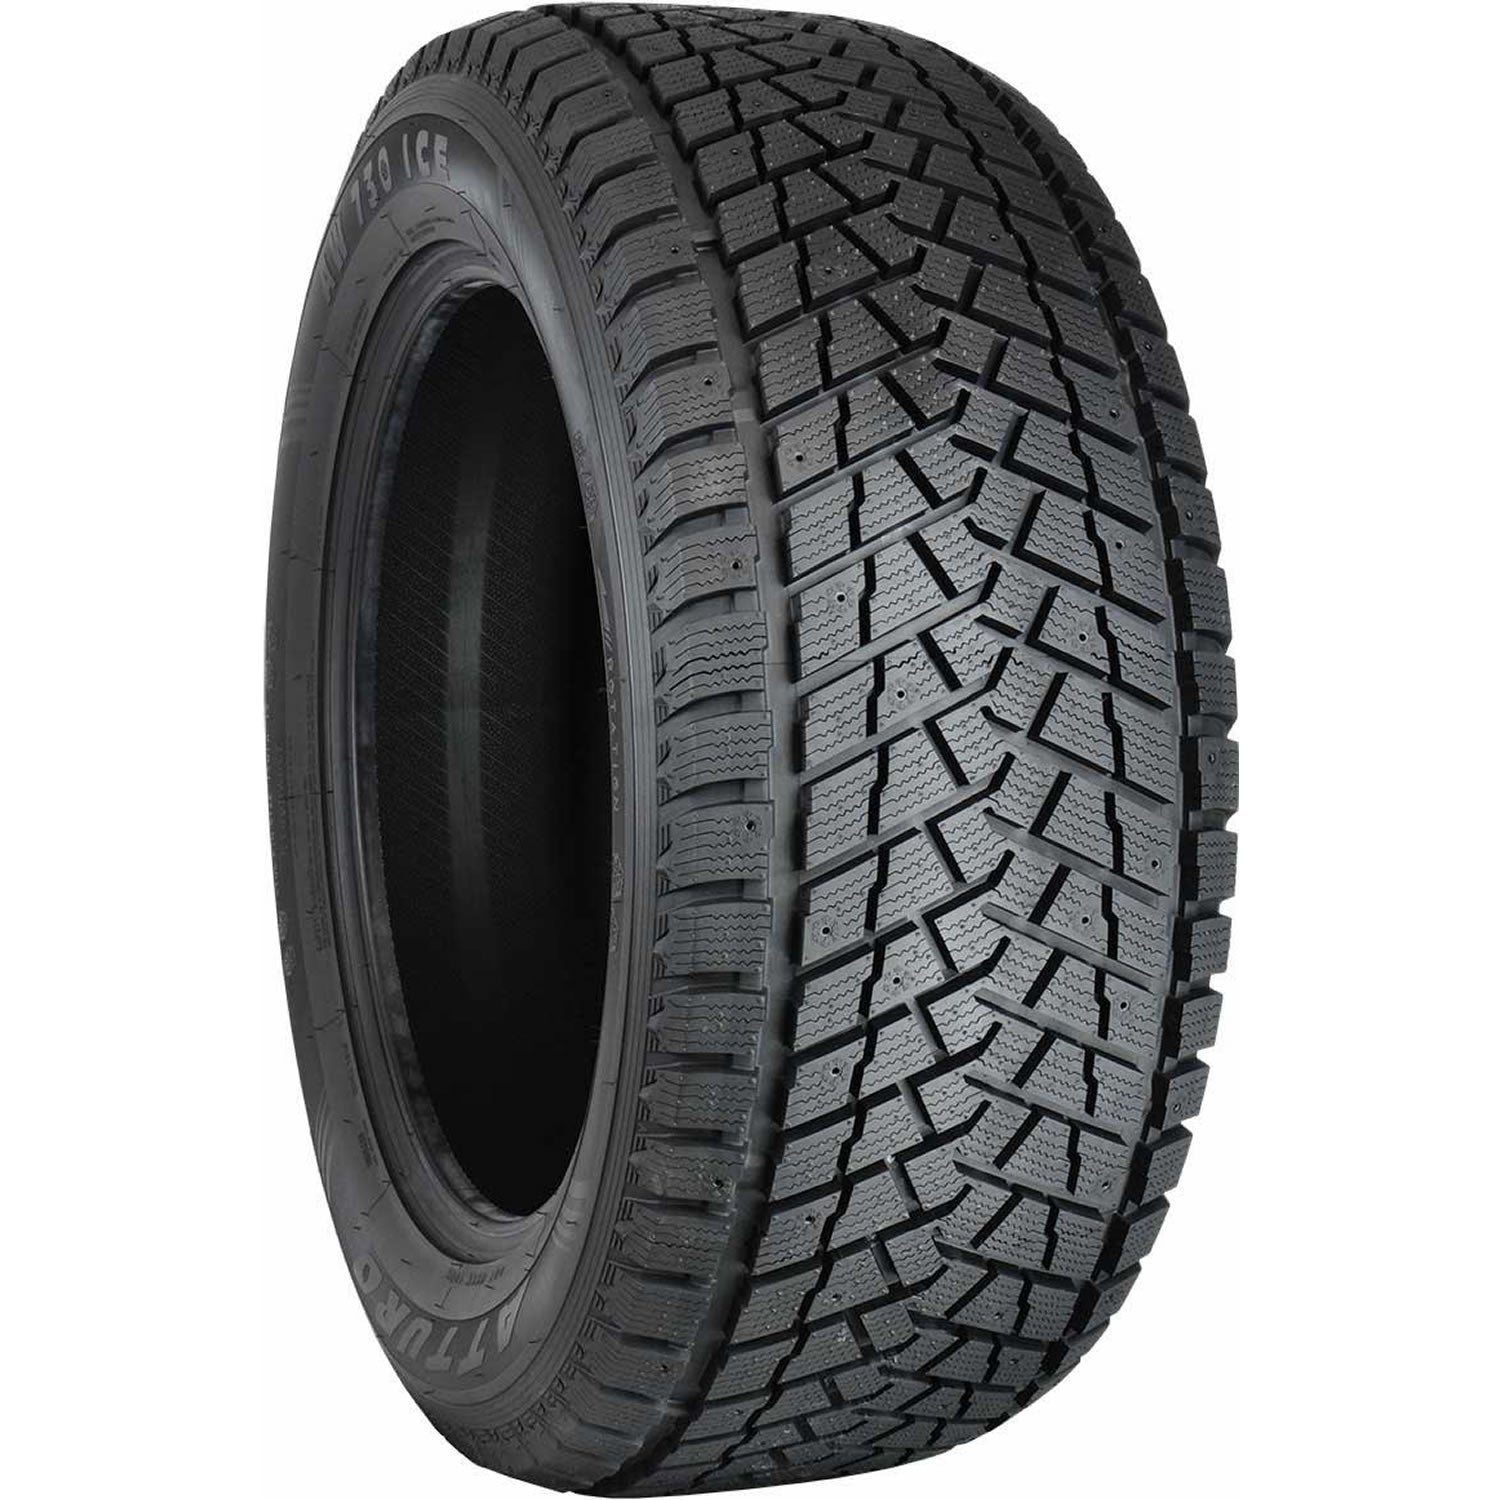 ATTURO AW730 ICE 275/45R20 (29.8X10.6R 20) Tires